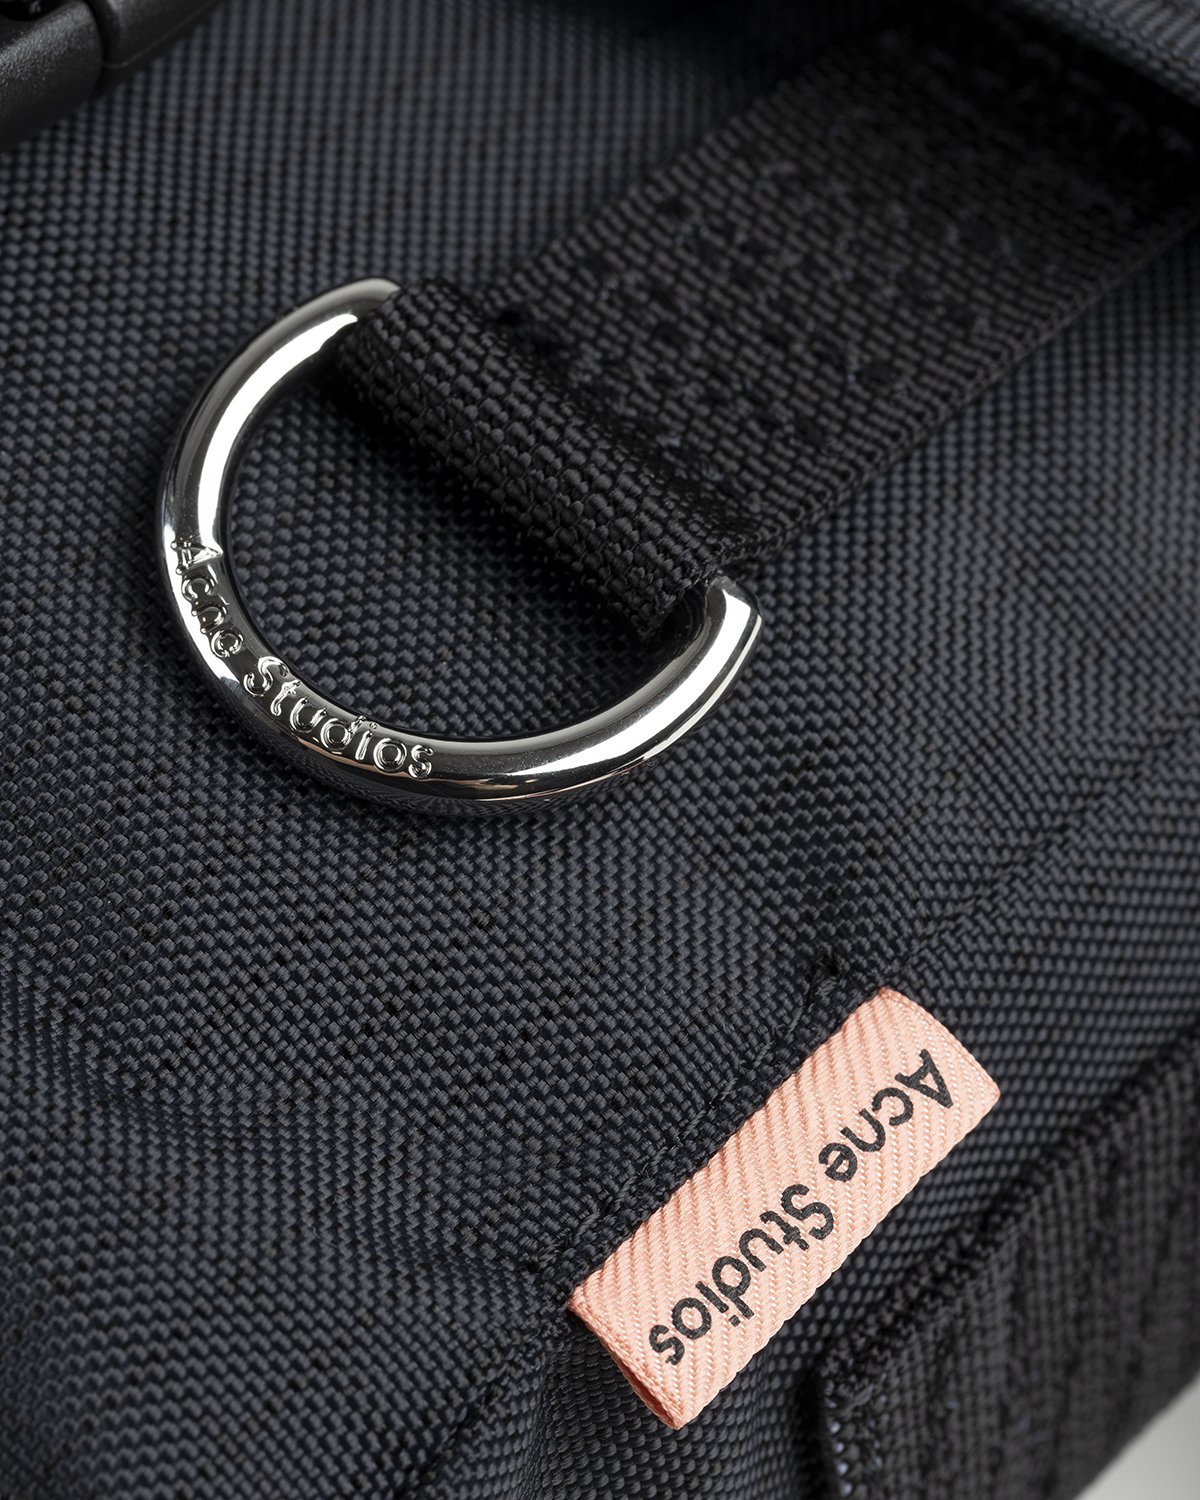 Acne Studios - Small Messenger Bag Black - Accessories - Black - Image 5